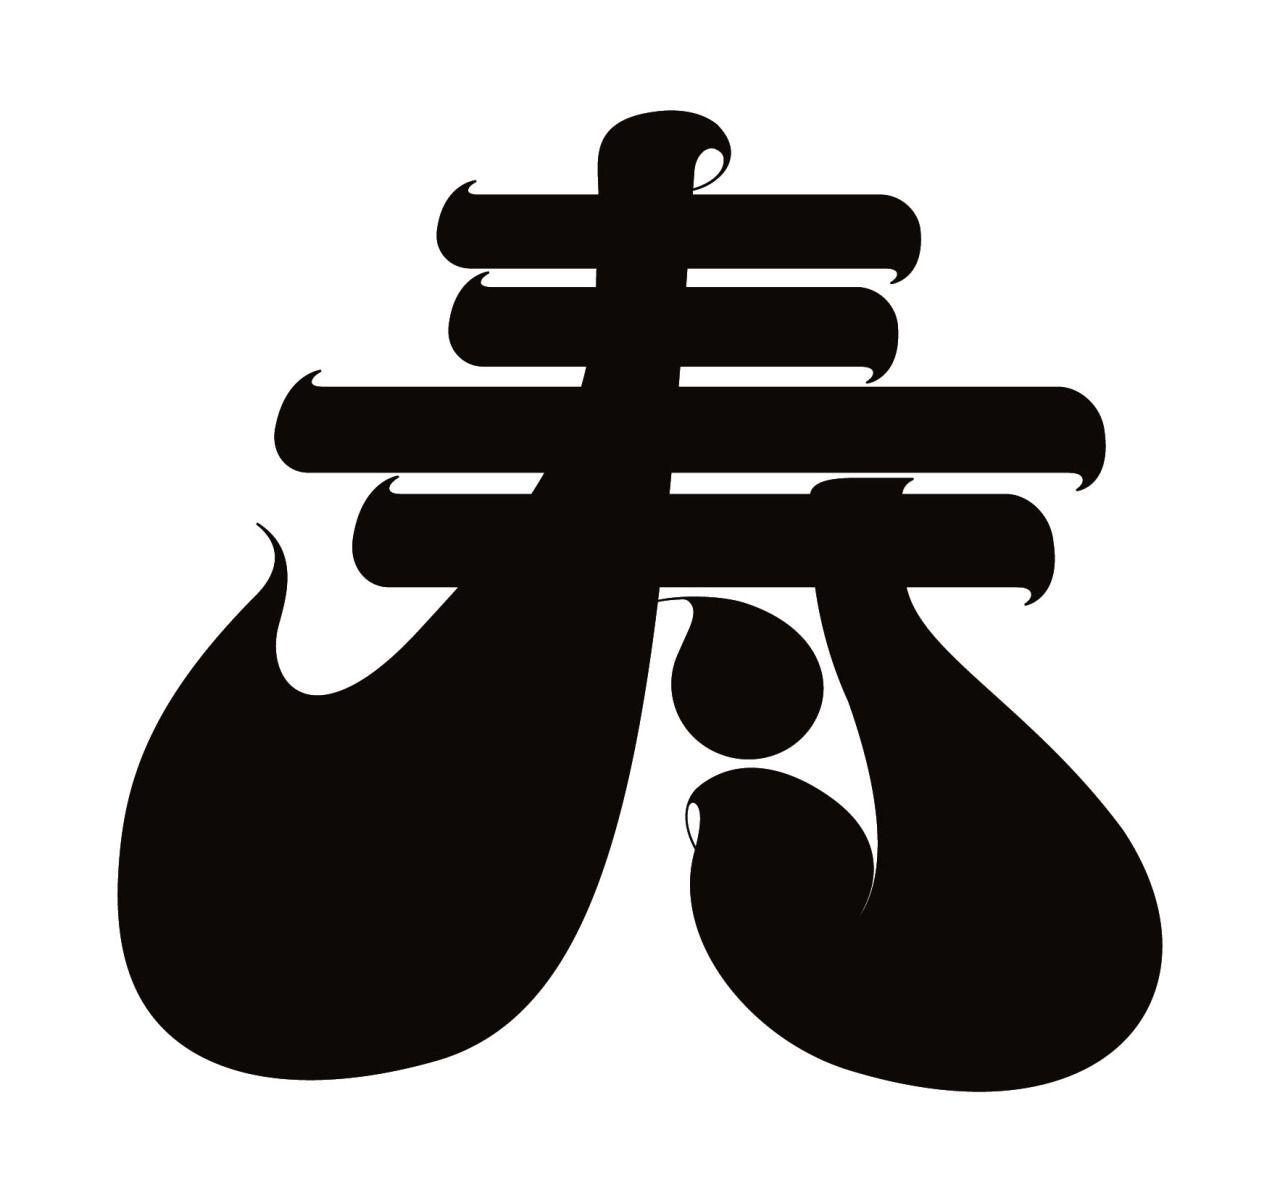 Japanese MP Logo - KOTOBUKIDesign: SasakiShun http://sasakishun.tumblr.com/post ...